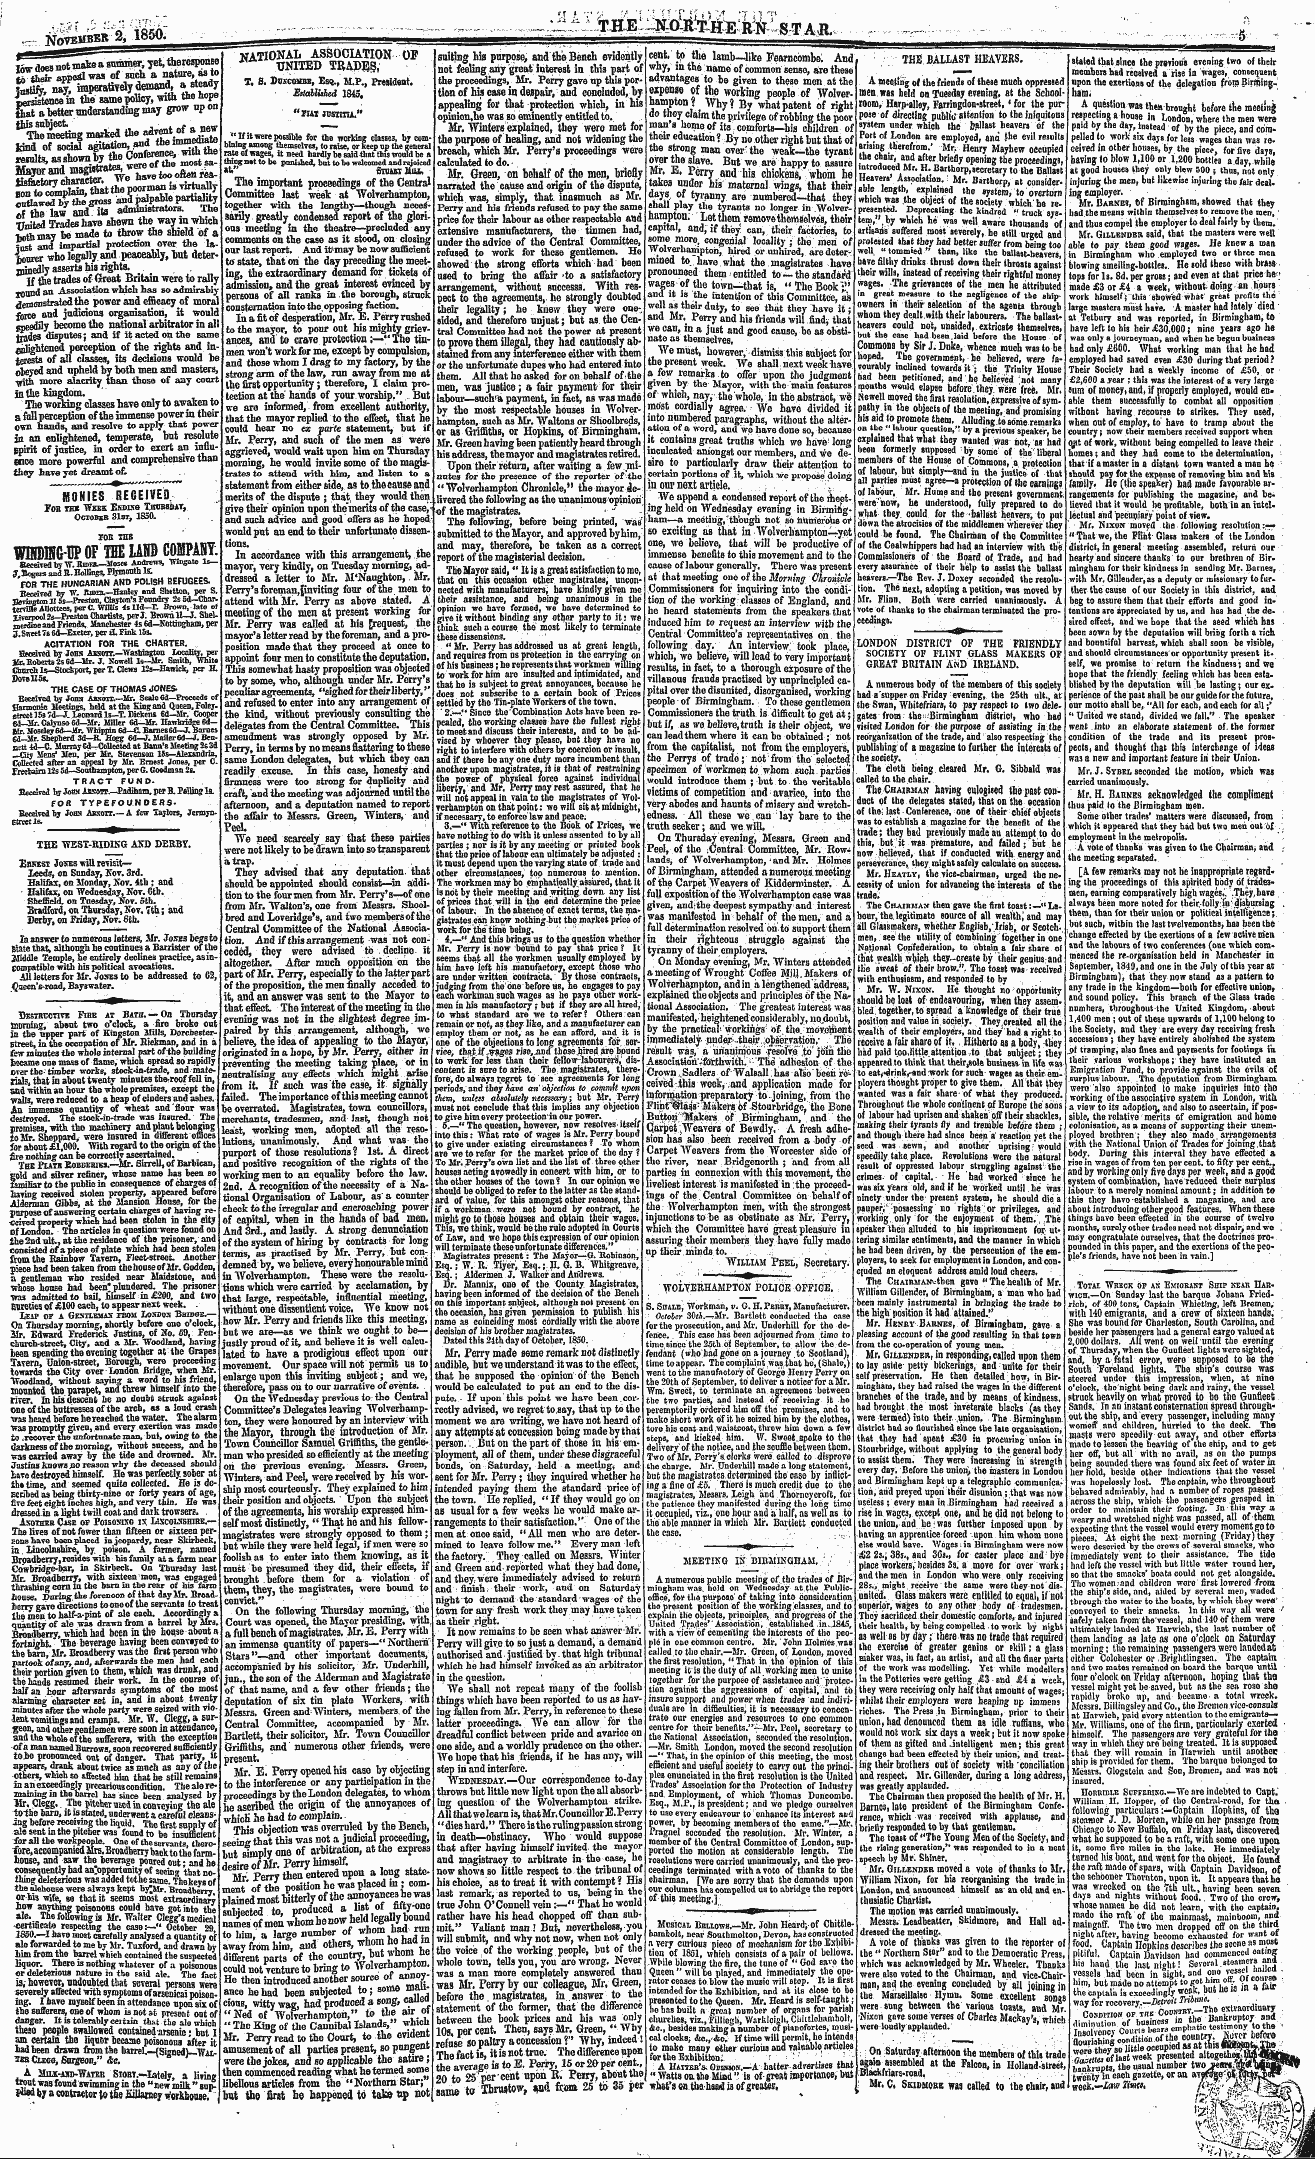 Northern Star (1837-1852): jS F Y, 2nd edition - 33estrcctttk Fire At Bath. — On Thursday...